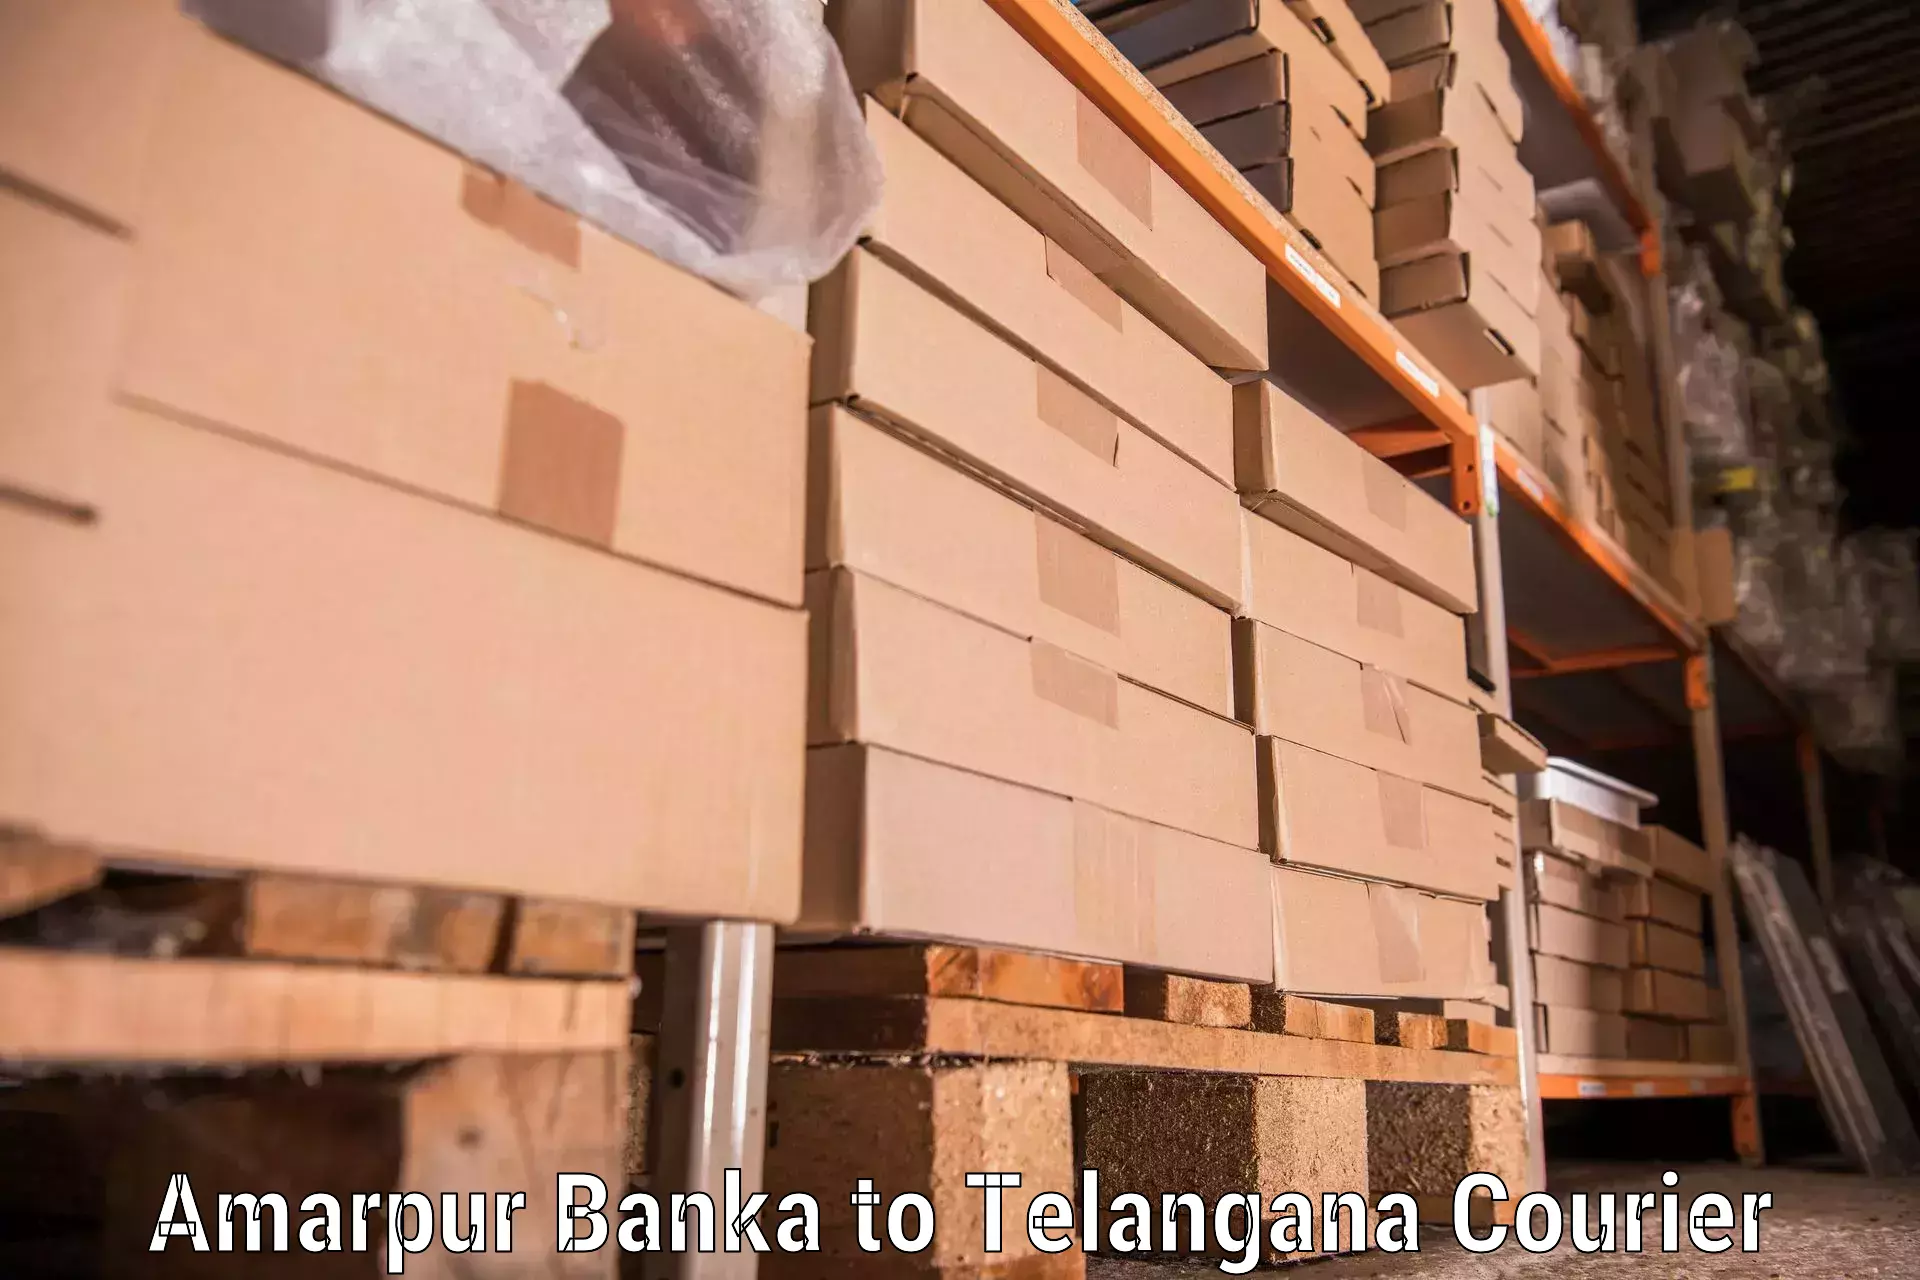 Professional moving assistance Amarpur Banka to Kamalapur